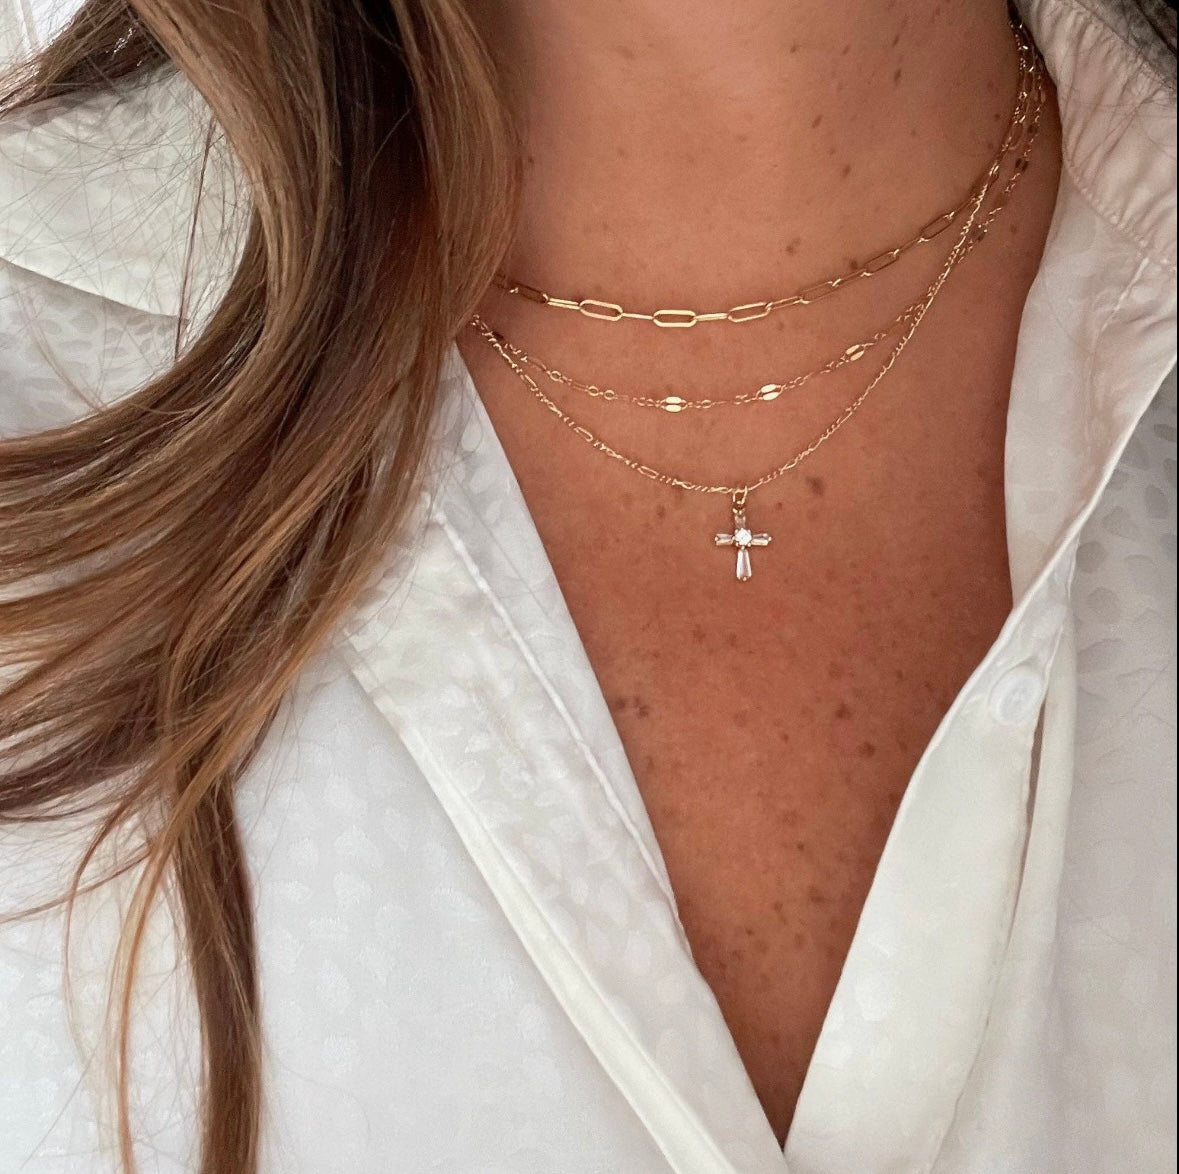 true by kristy jewelry - Petite CZ Cross Pendant Necklace Gold Filled